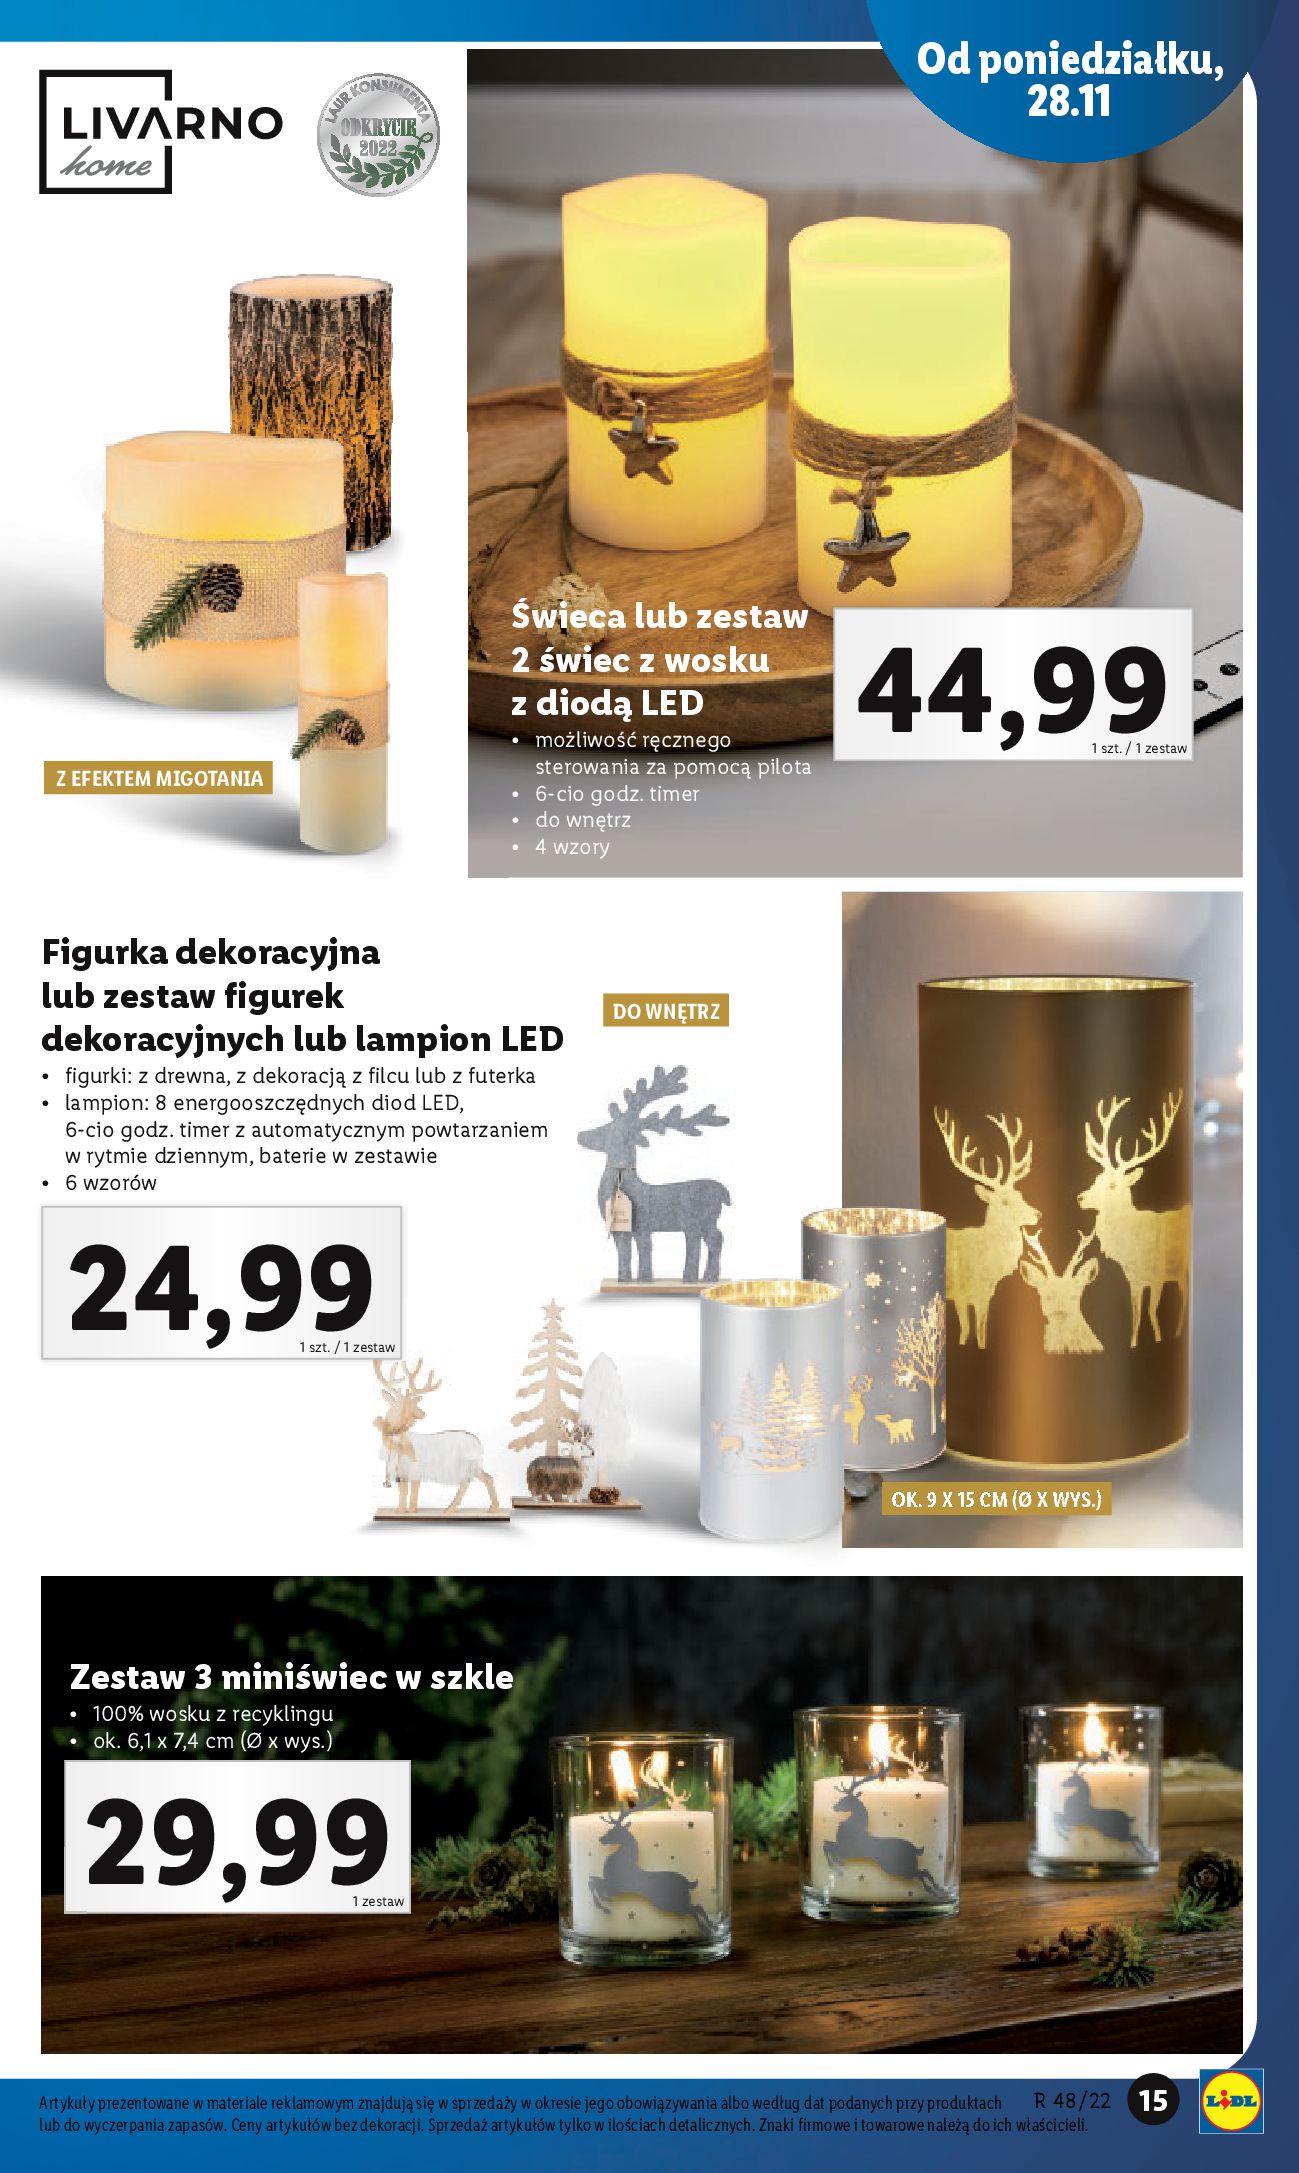 Gazetka Lidl: Gazetka Lidl - Katalog od 28.11. 2022-11-28 page-15